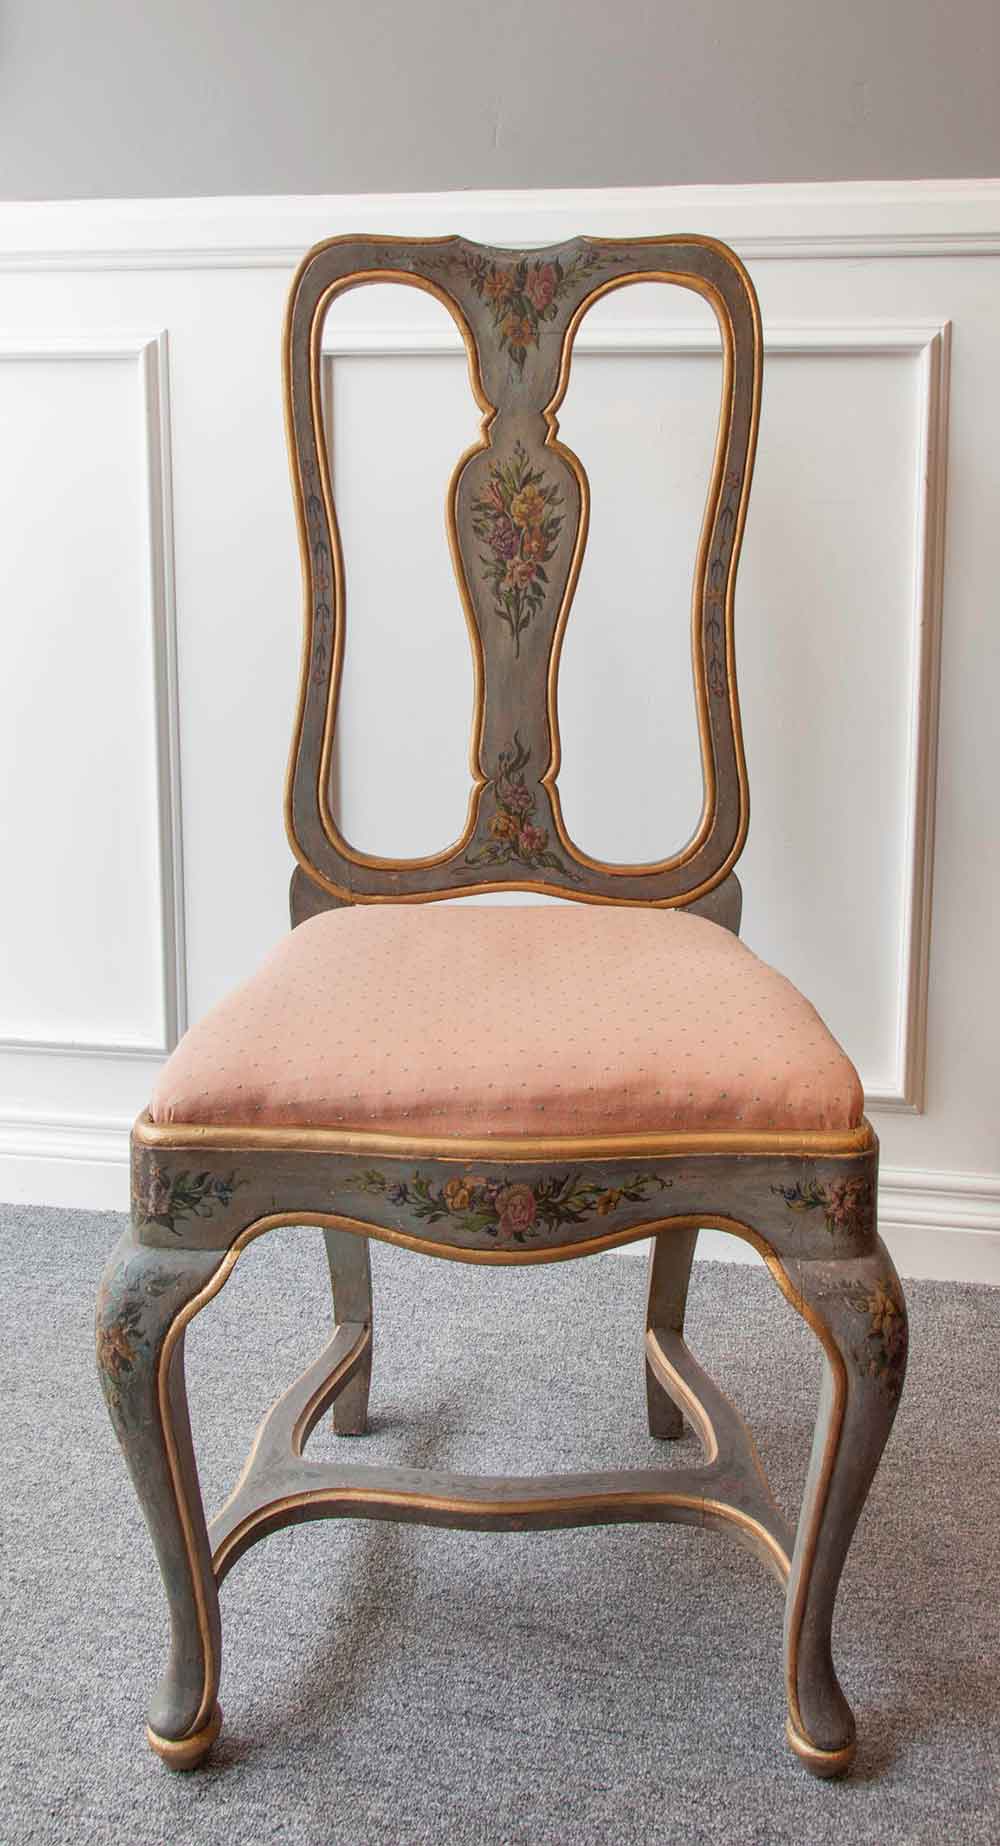 Italian Painted Chair